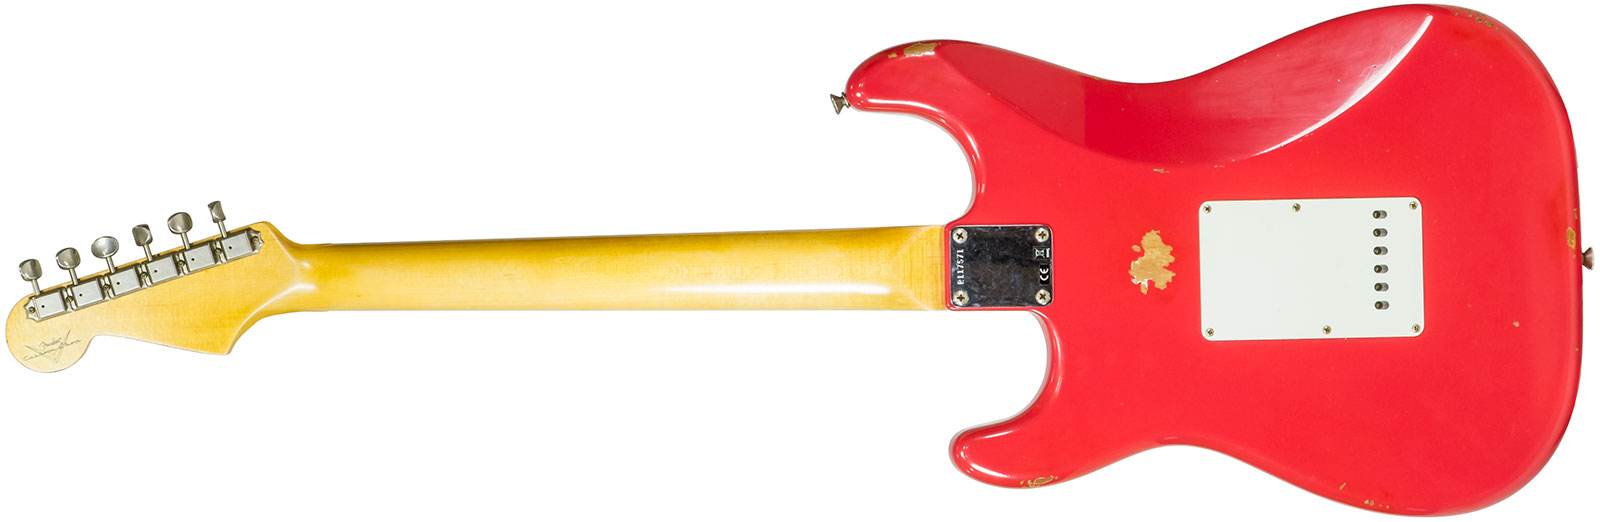 Fender Custom Shop Strat 1963 3s Trem Rw #r117571 - Relic Fiesta Red - Guitare Électrique Forme Str - Variation 1